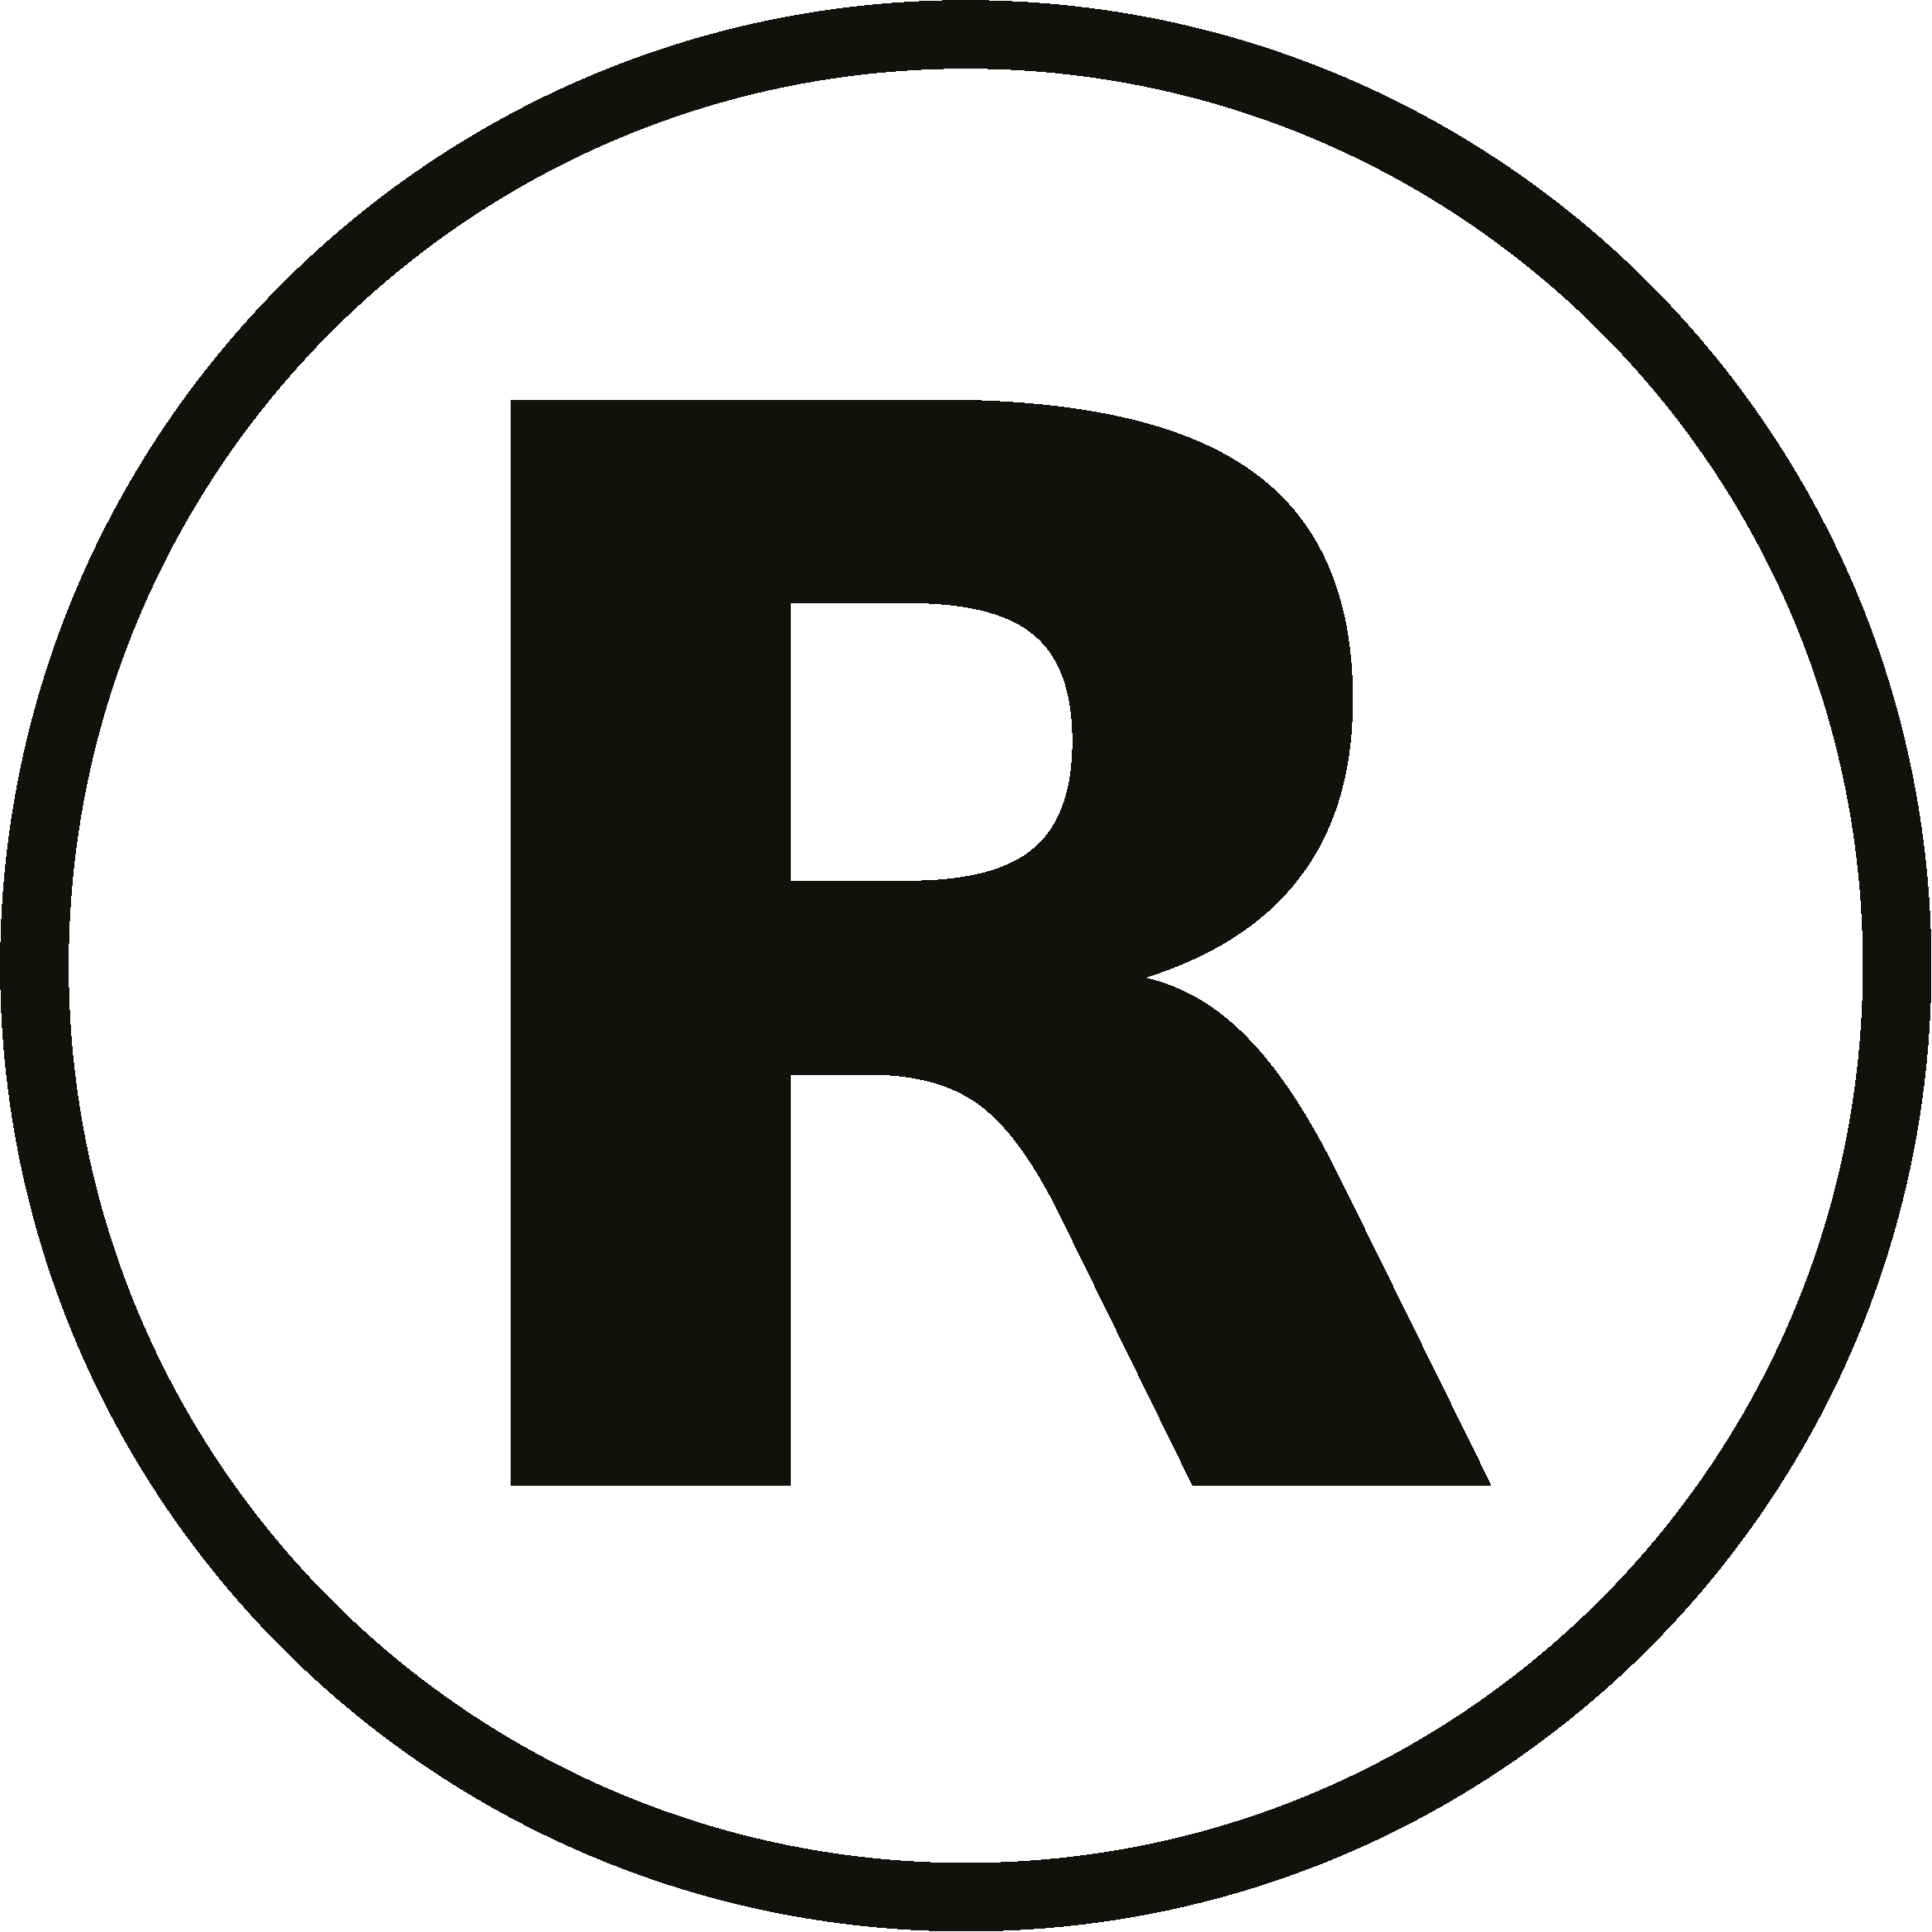 В черном круге буква. Логотип r. Буква r. Значок буквы r. Эмблема с буквой r.